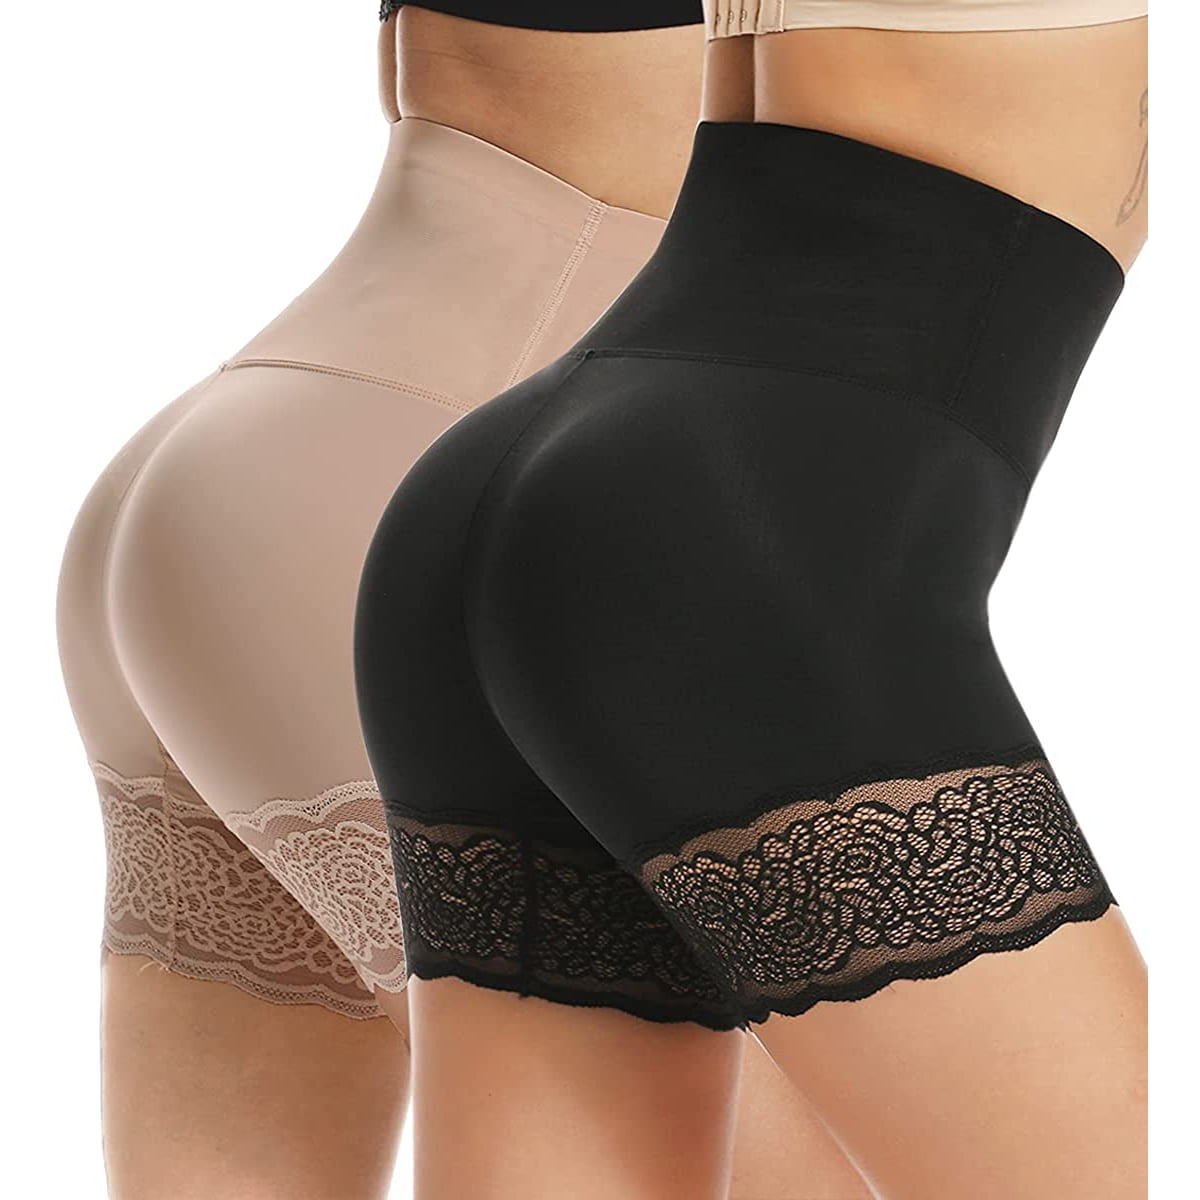 Xysaqa Women Butt Lifter Shapewear Seamless Breathable High Waist Double Tummy  Control Panty Waist Sheer Lace Body Shaper on Clearance 